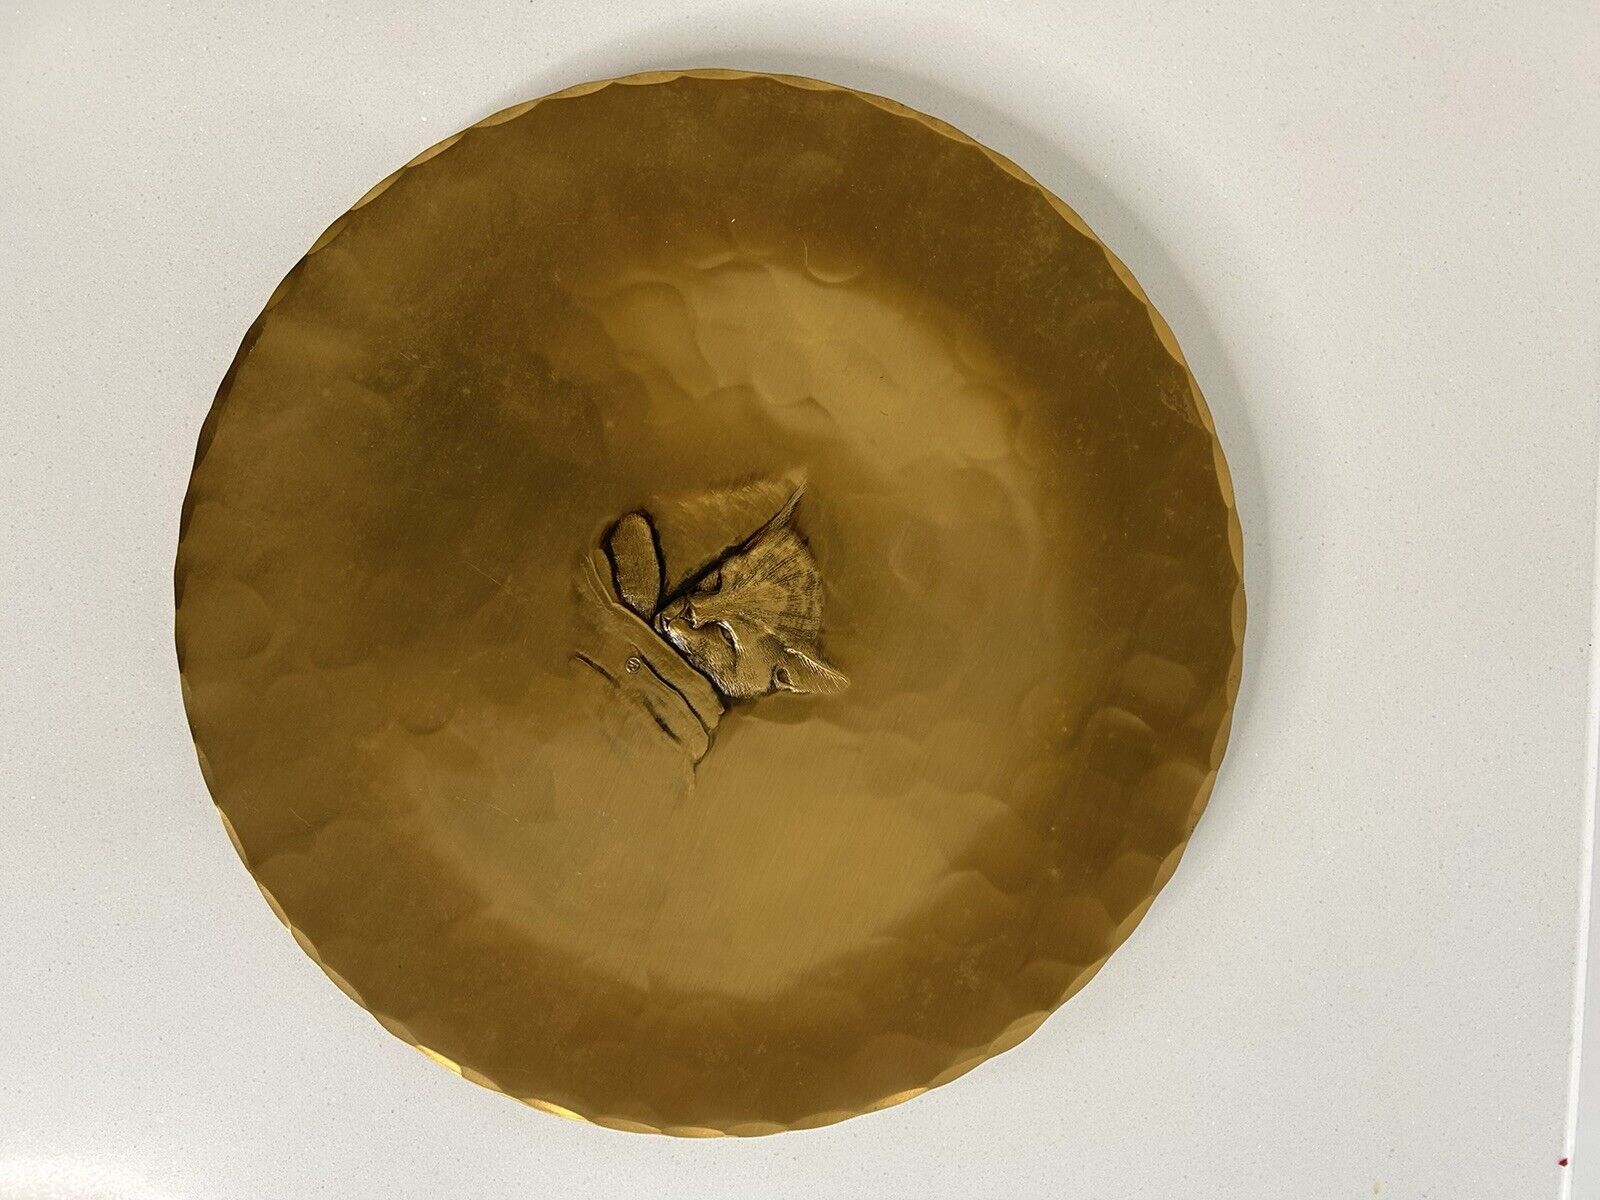 Handmade Wendell August Forge Solid Bronze Kitten Plate 9 Inch Great gift VTG